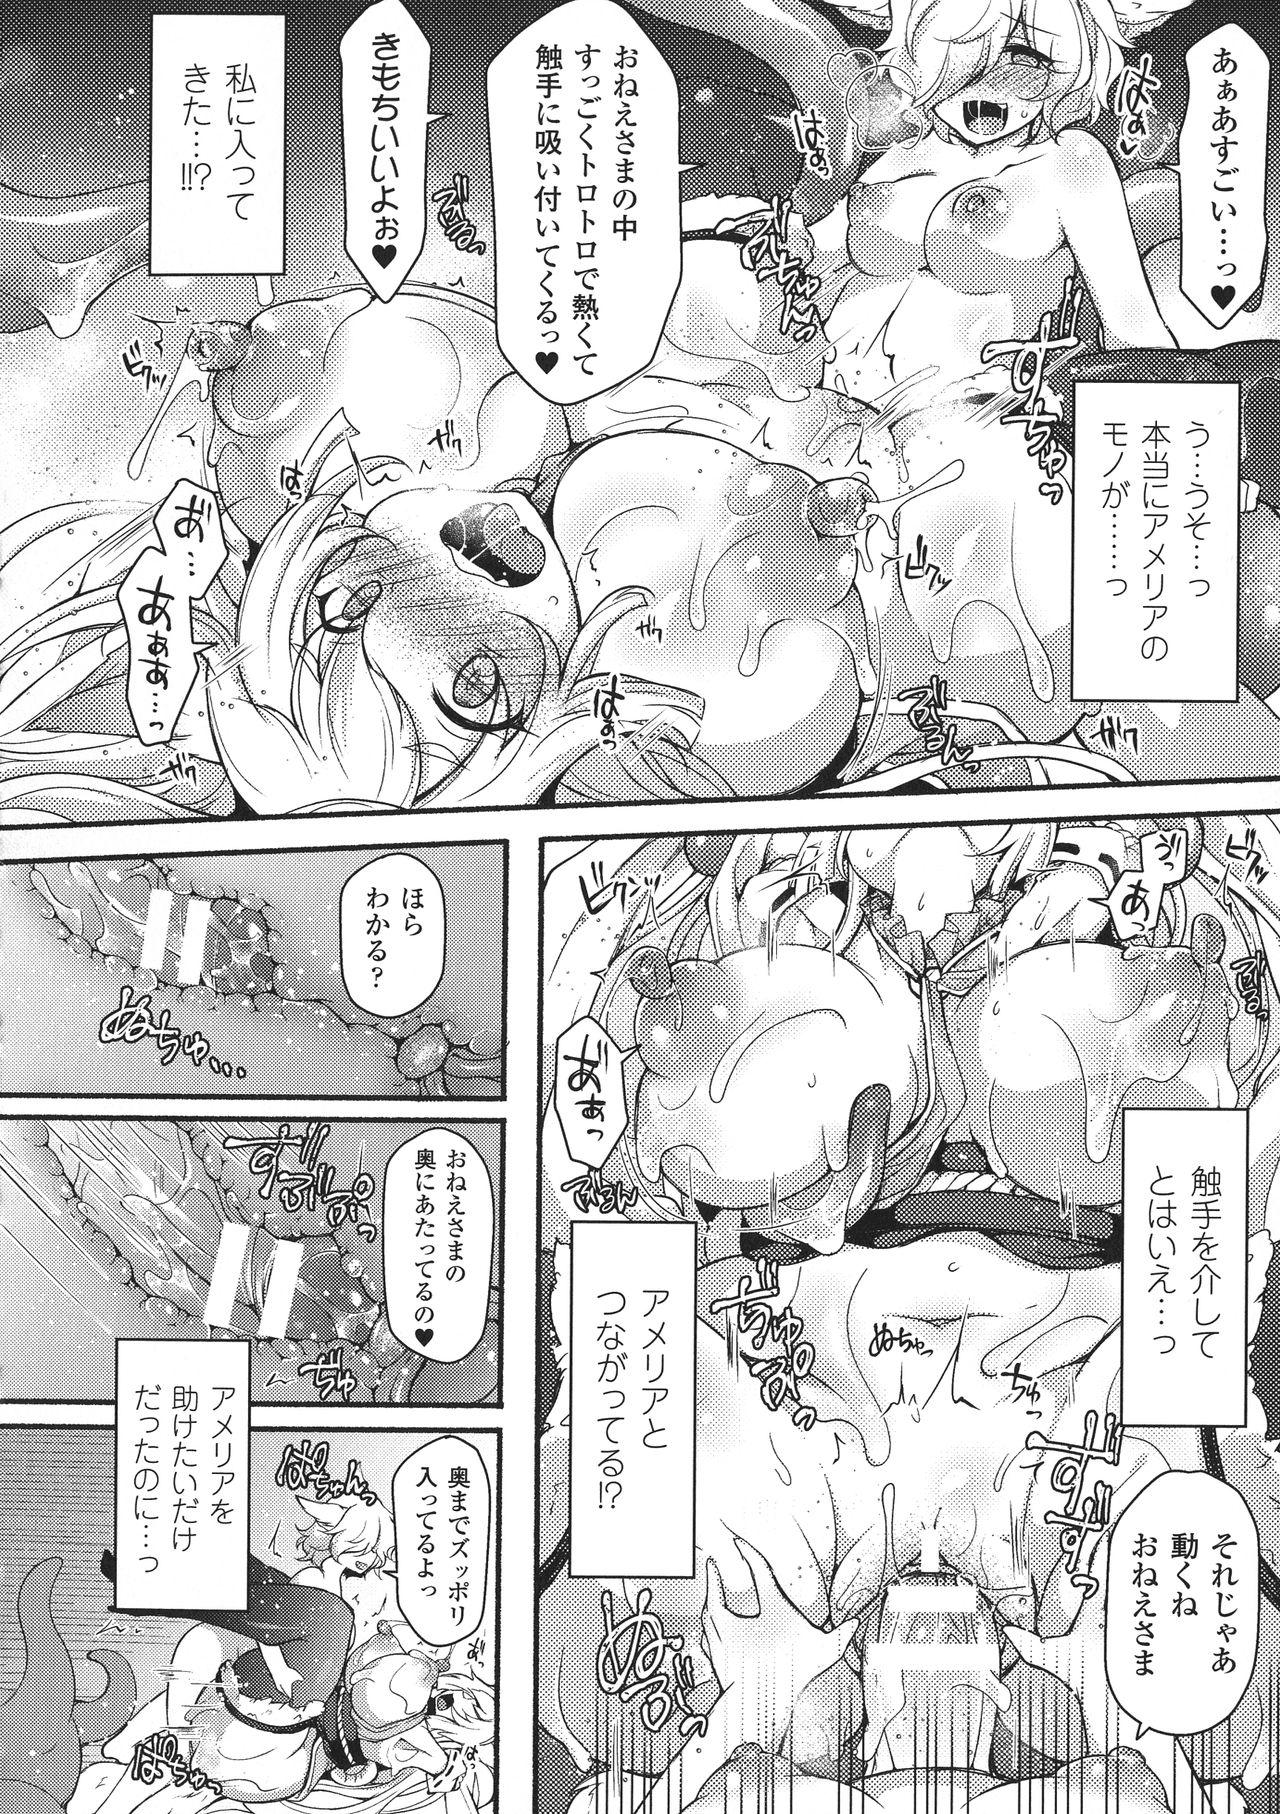 Seigi no Heroine Kangoku File DX Vol. 8 143